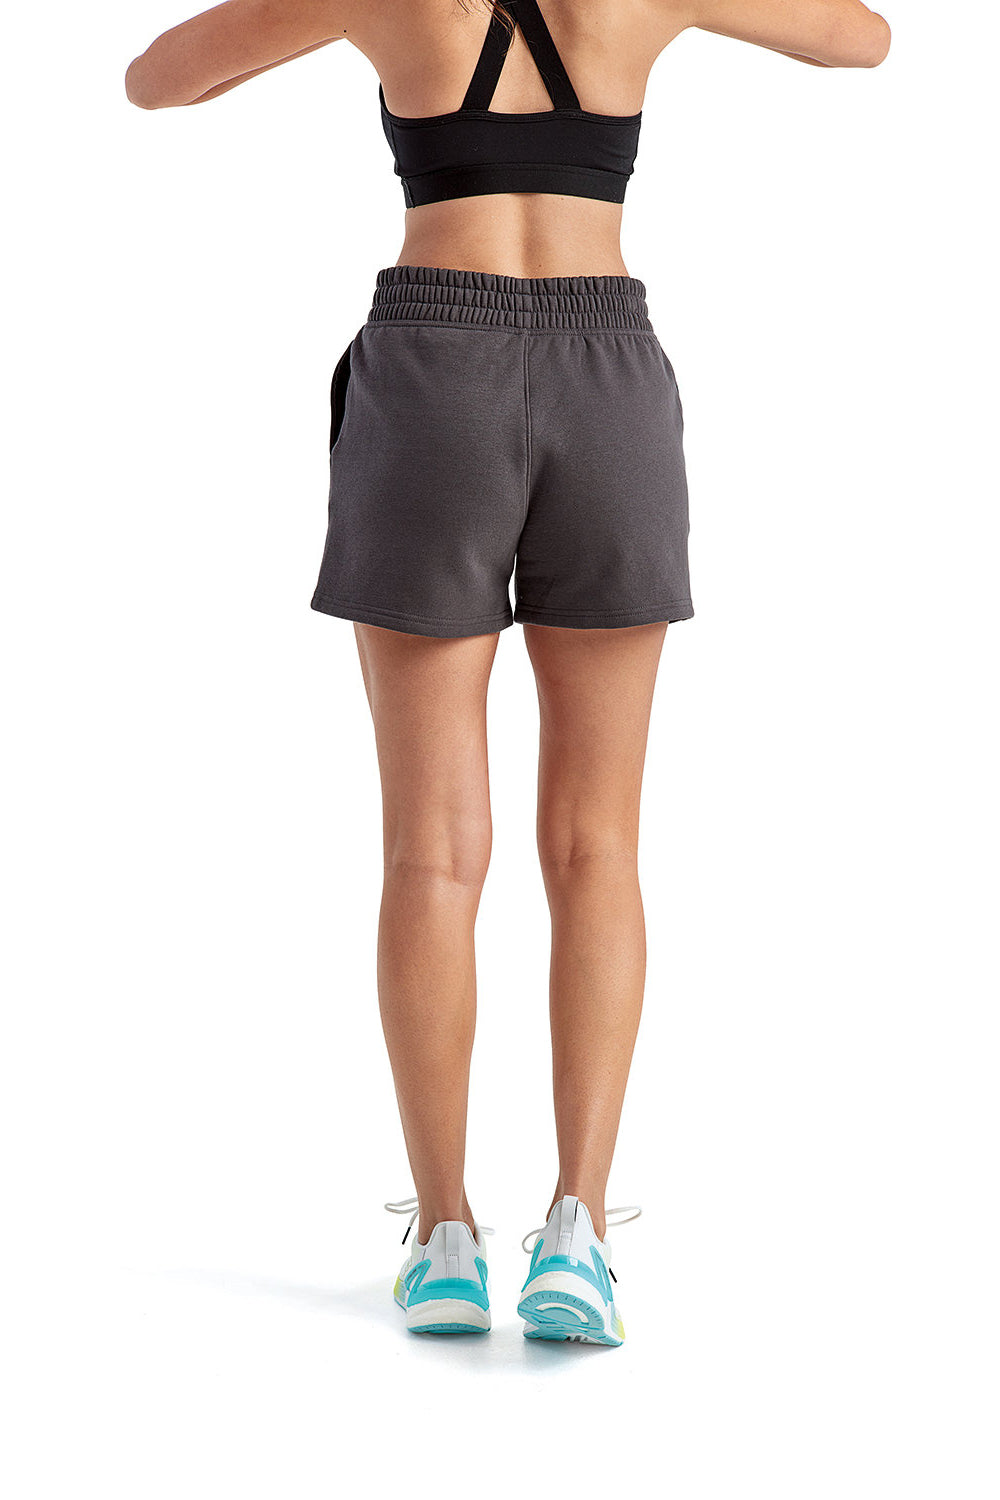 TriDri TD062 Womens Maria Jogger Shorts w/ Pockets Charcoal Grey Back